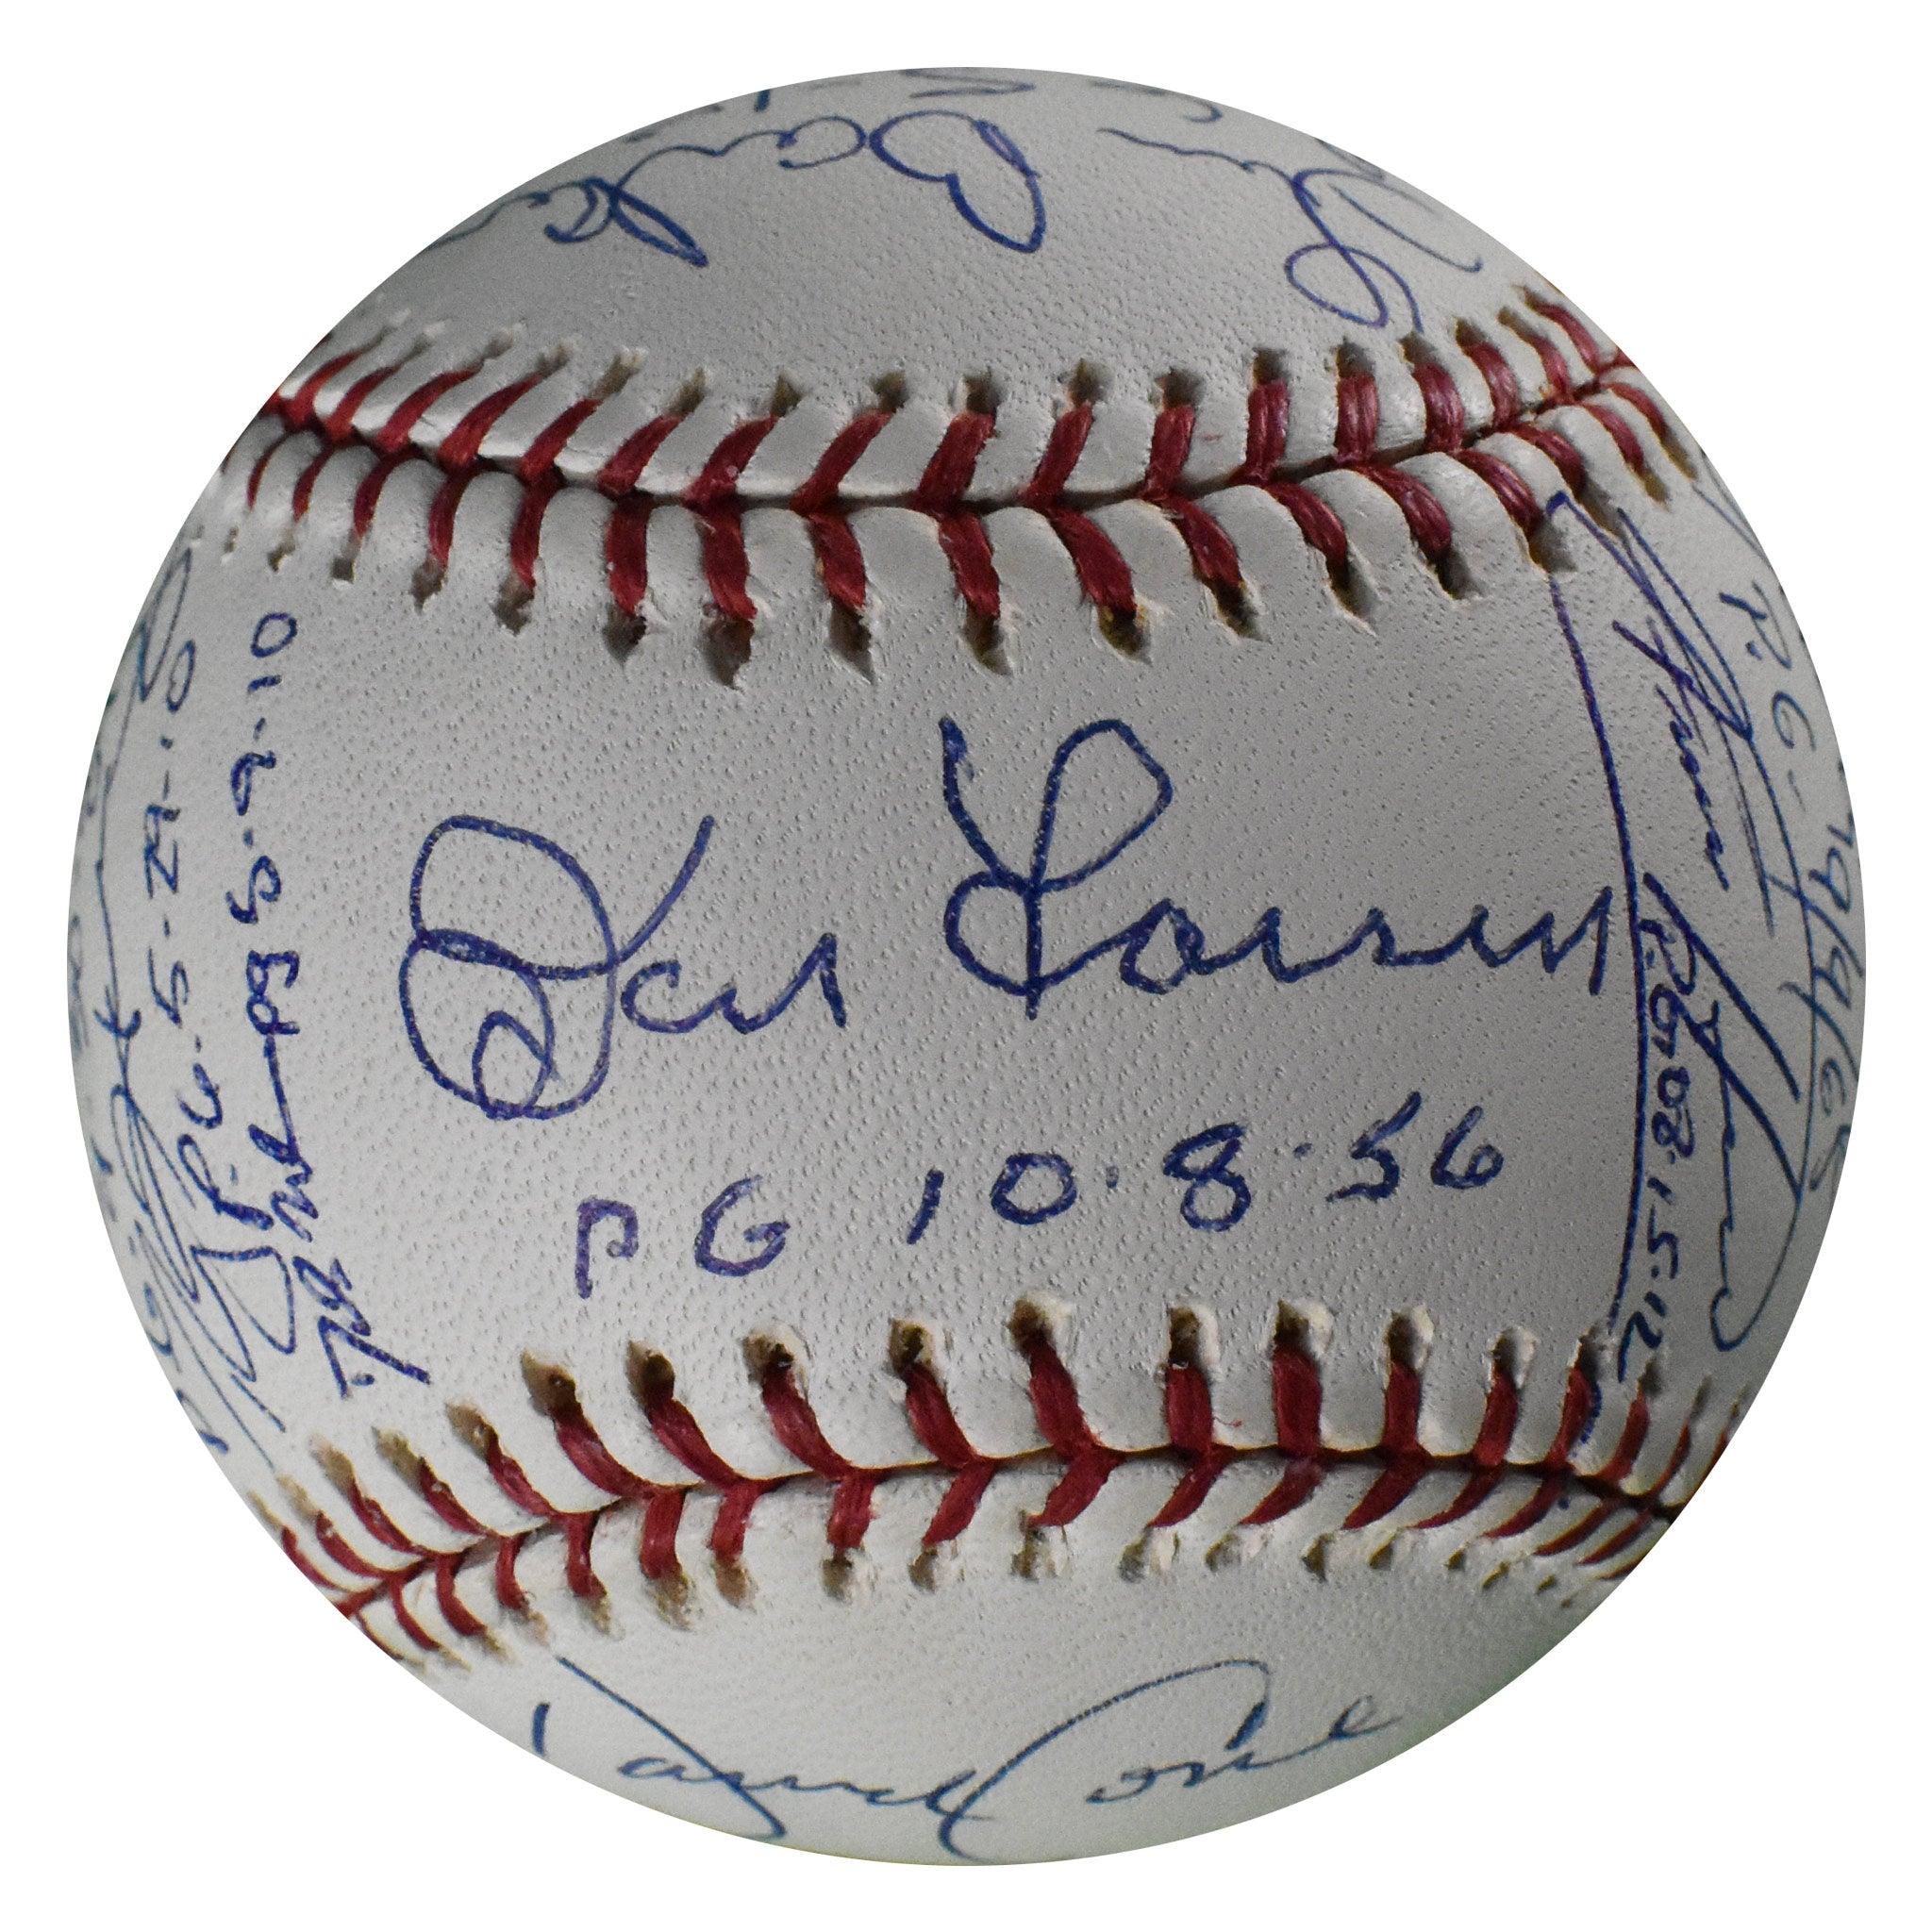 Randy Johnson P.G. 5-18-04 Single Signed Baseball. Basketball